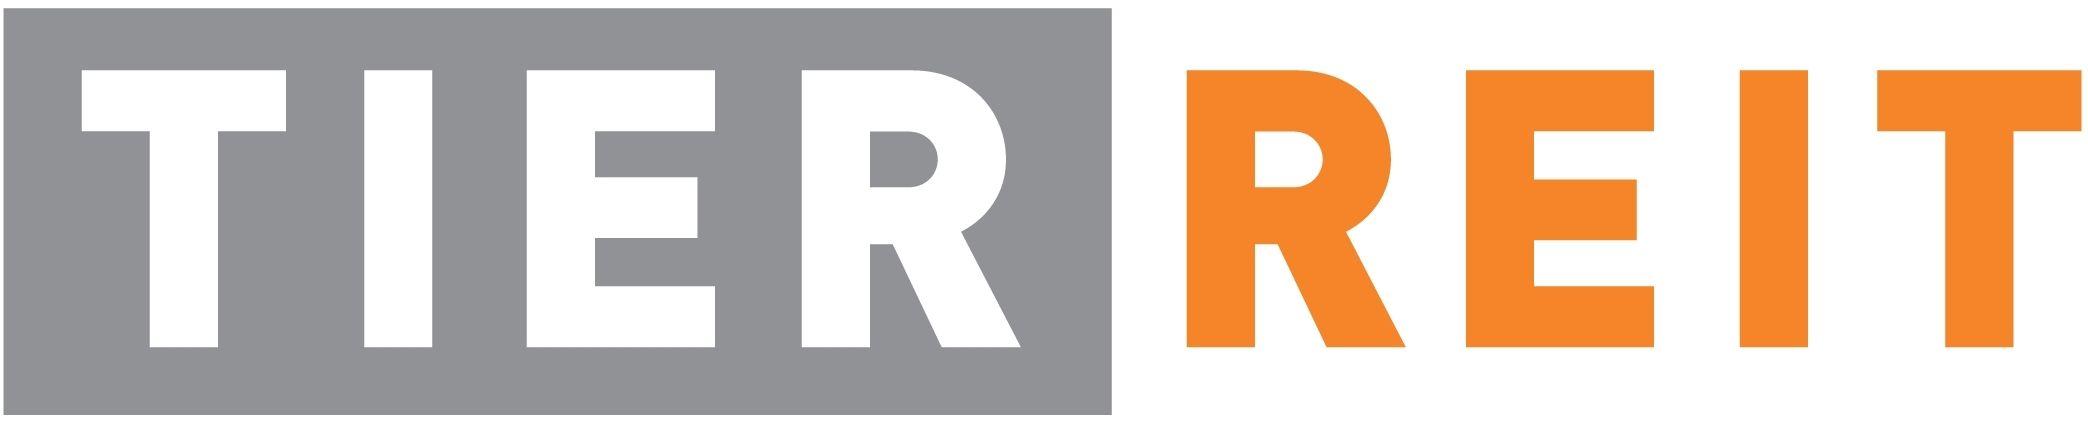 REIT Logo - TIER REIT, Inc. TIER NYSE